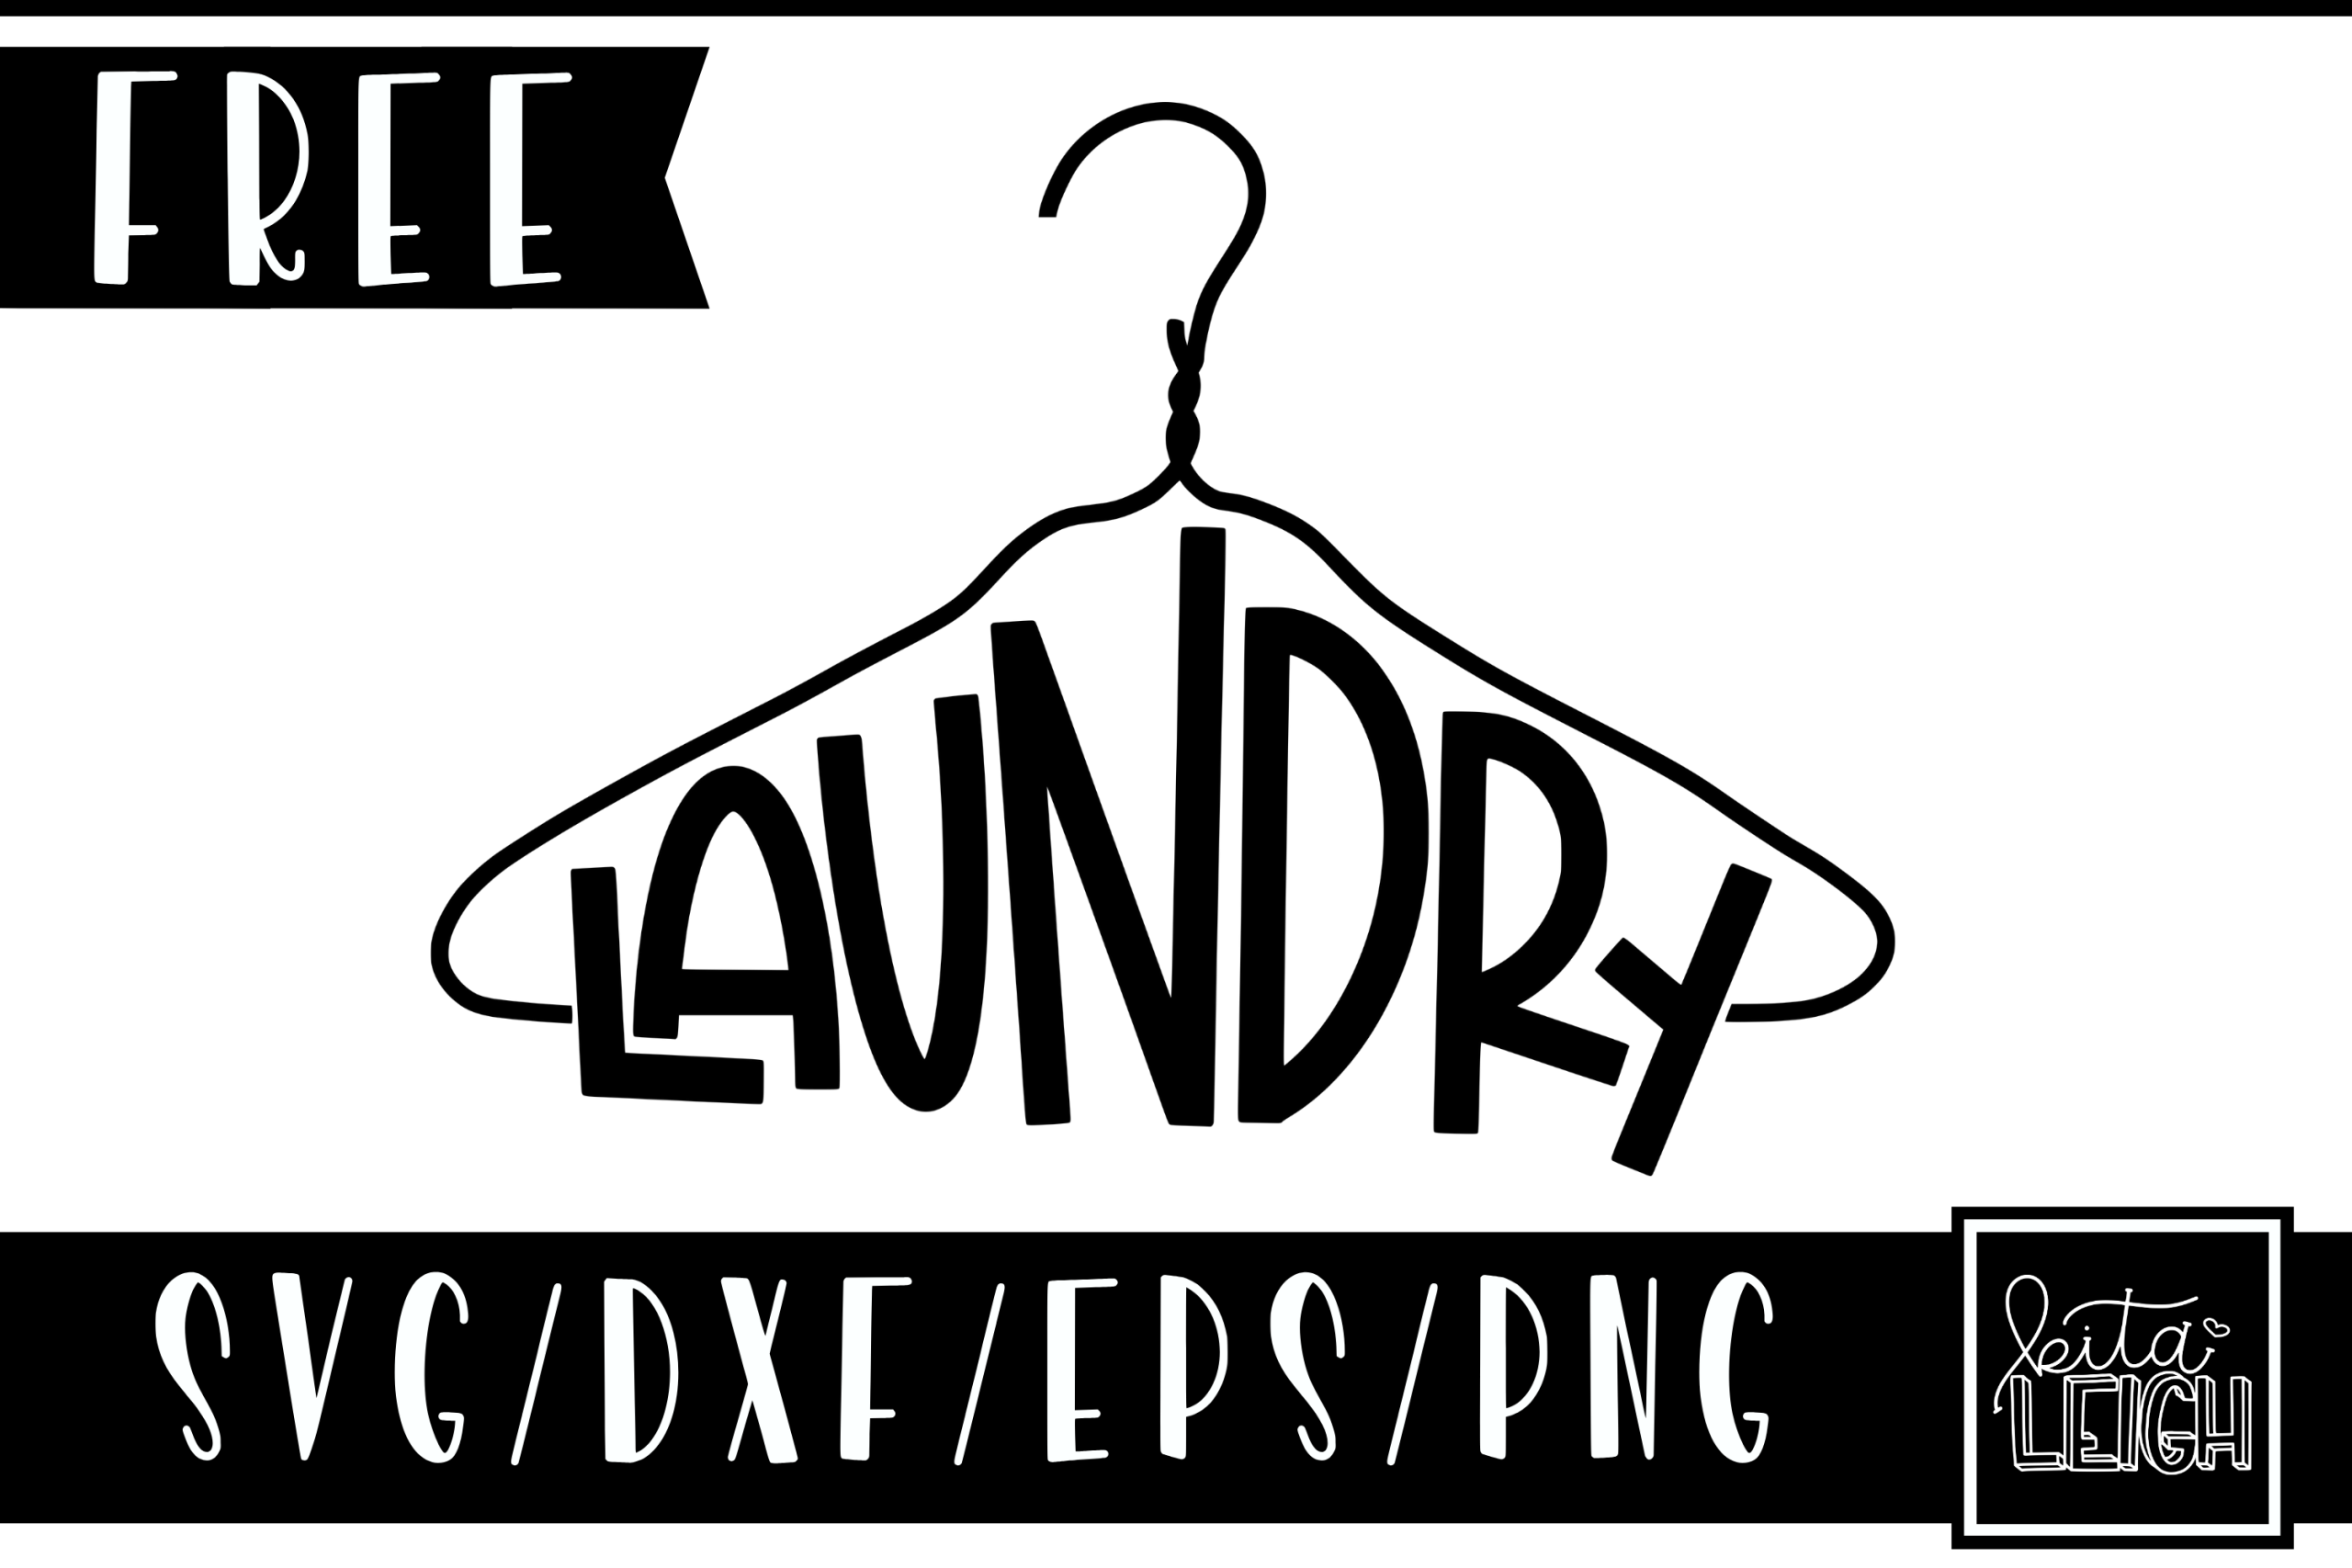 Download FREE Laundry Hanger SVG - Kitaleigh LLC